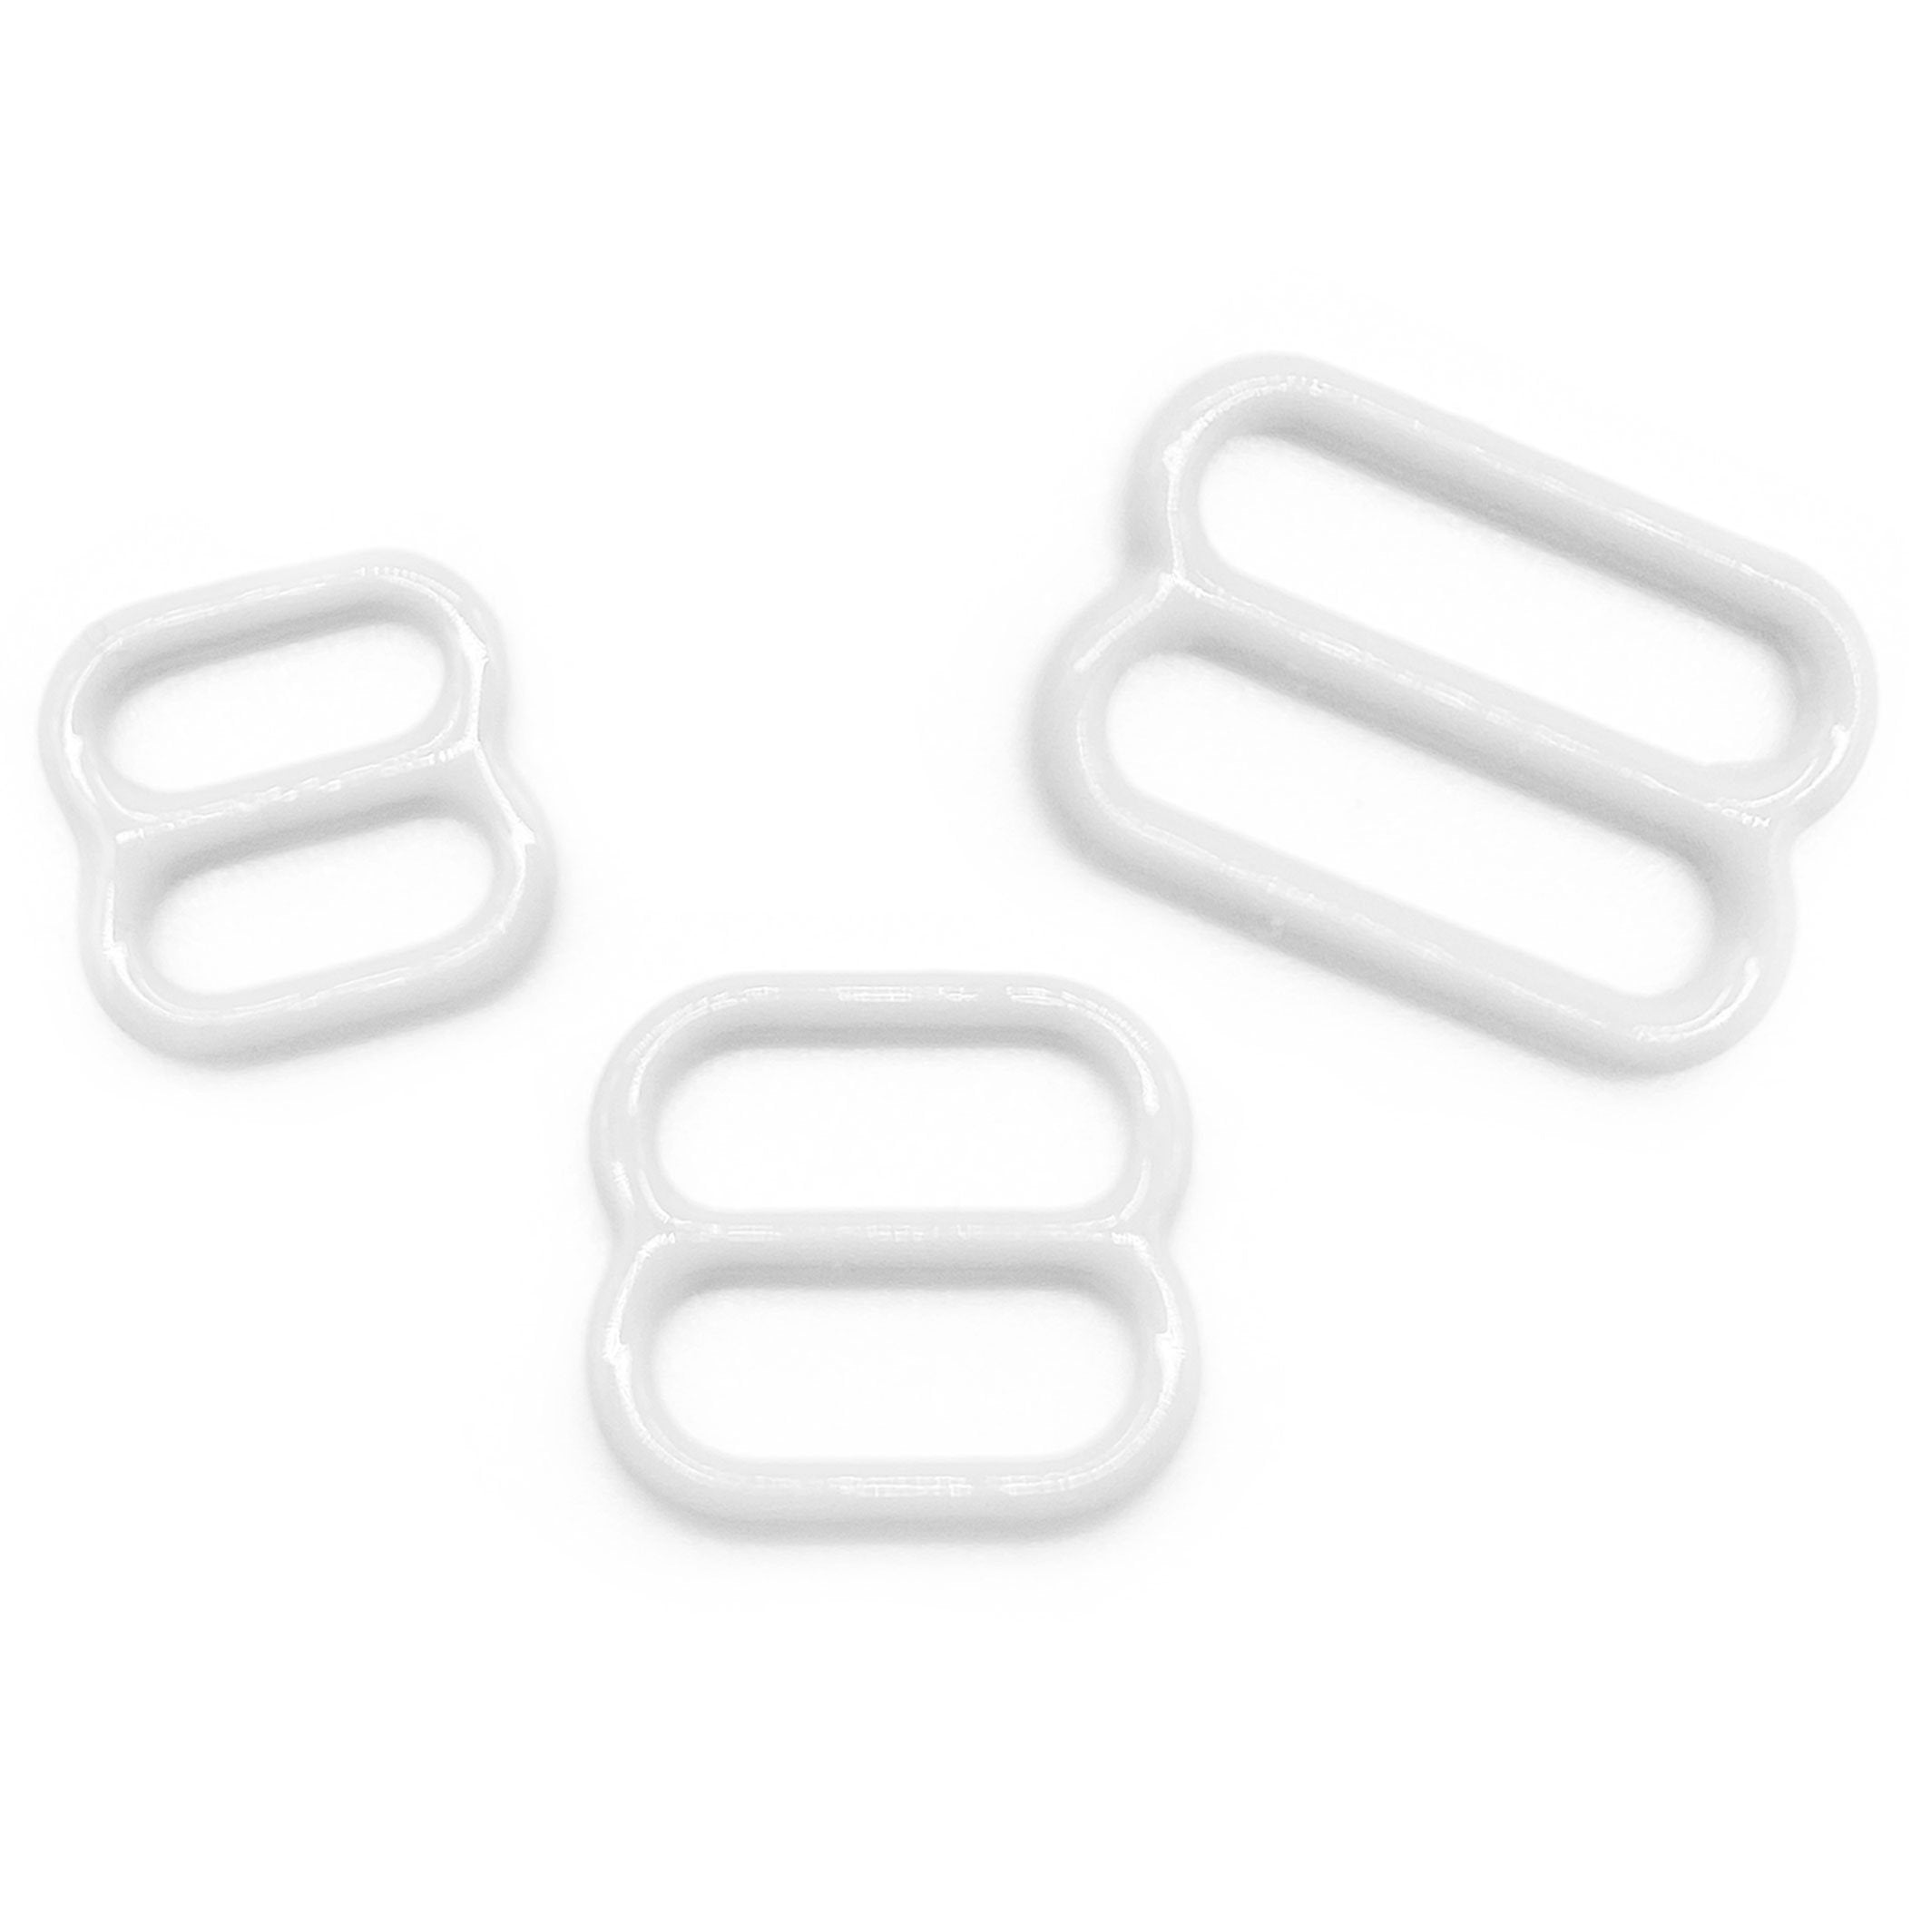 CLEARANCE- Set of 2 Rings OR 2 Sliders White Enamel for Bra making or Swimwear - 1/4"/6mm, 3/8"/10mm, 1/2"/12mm-Stitch Love Studio